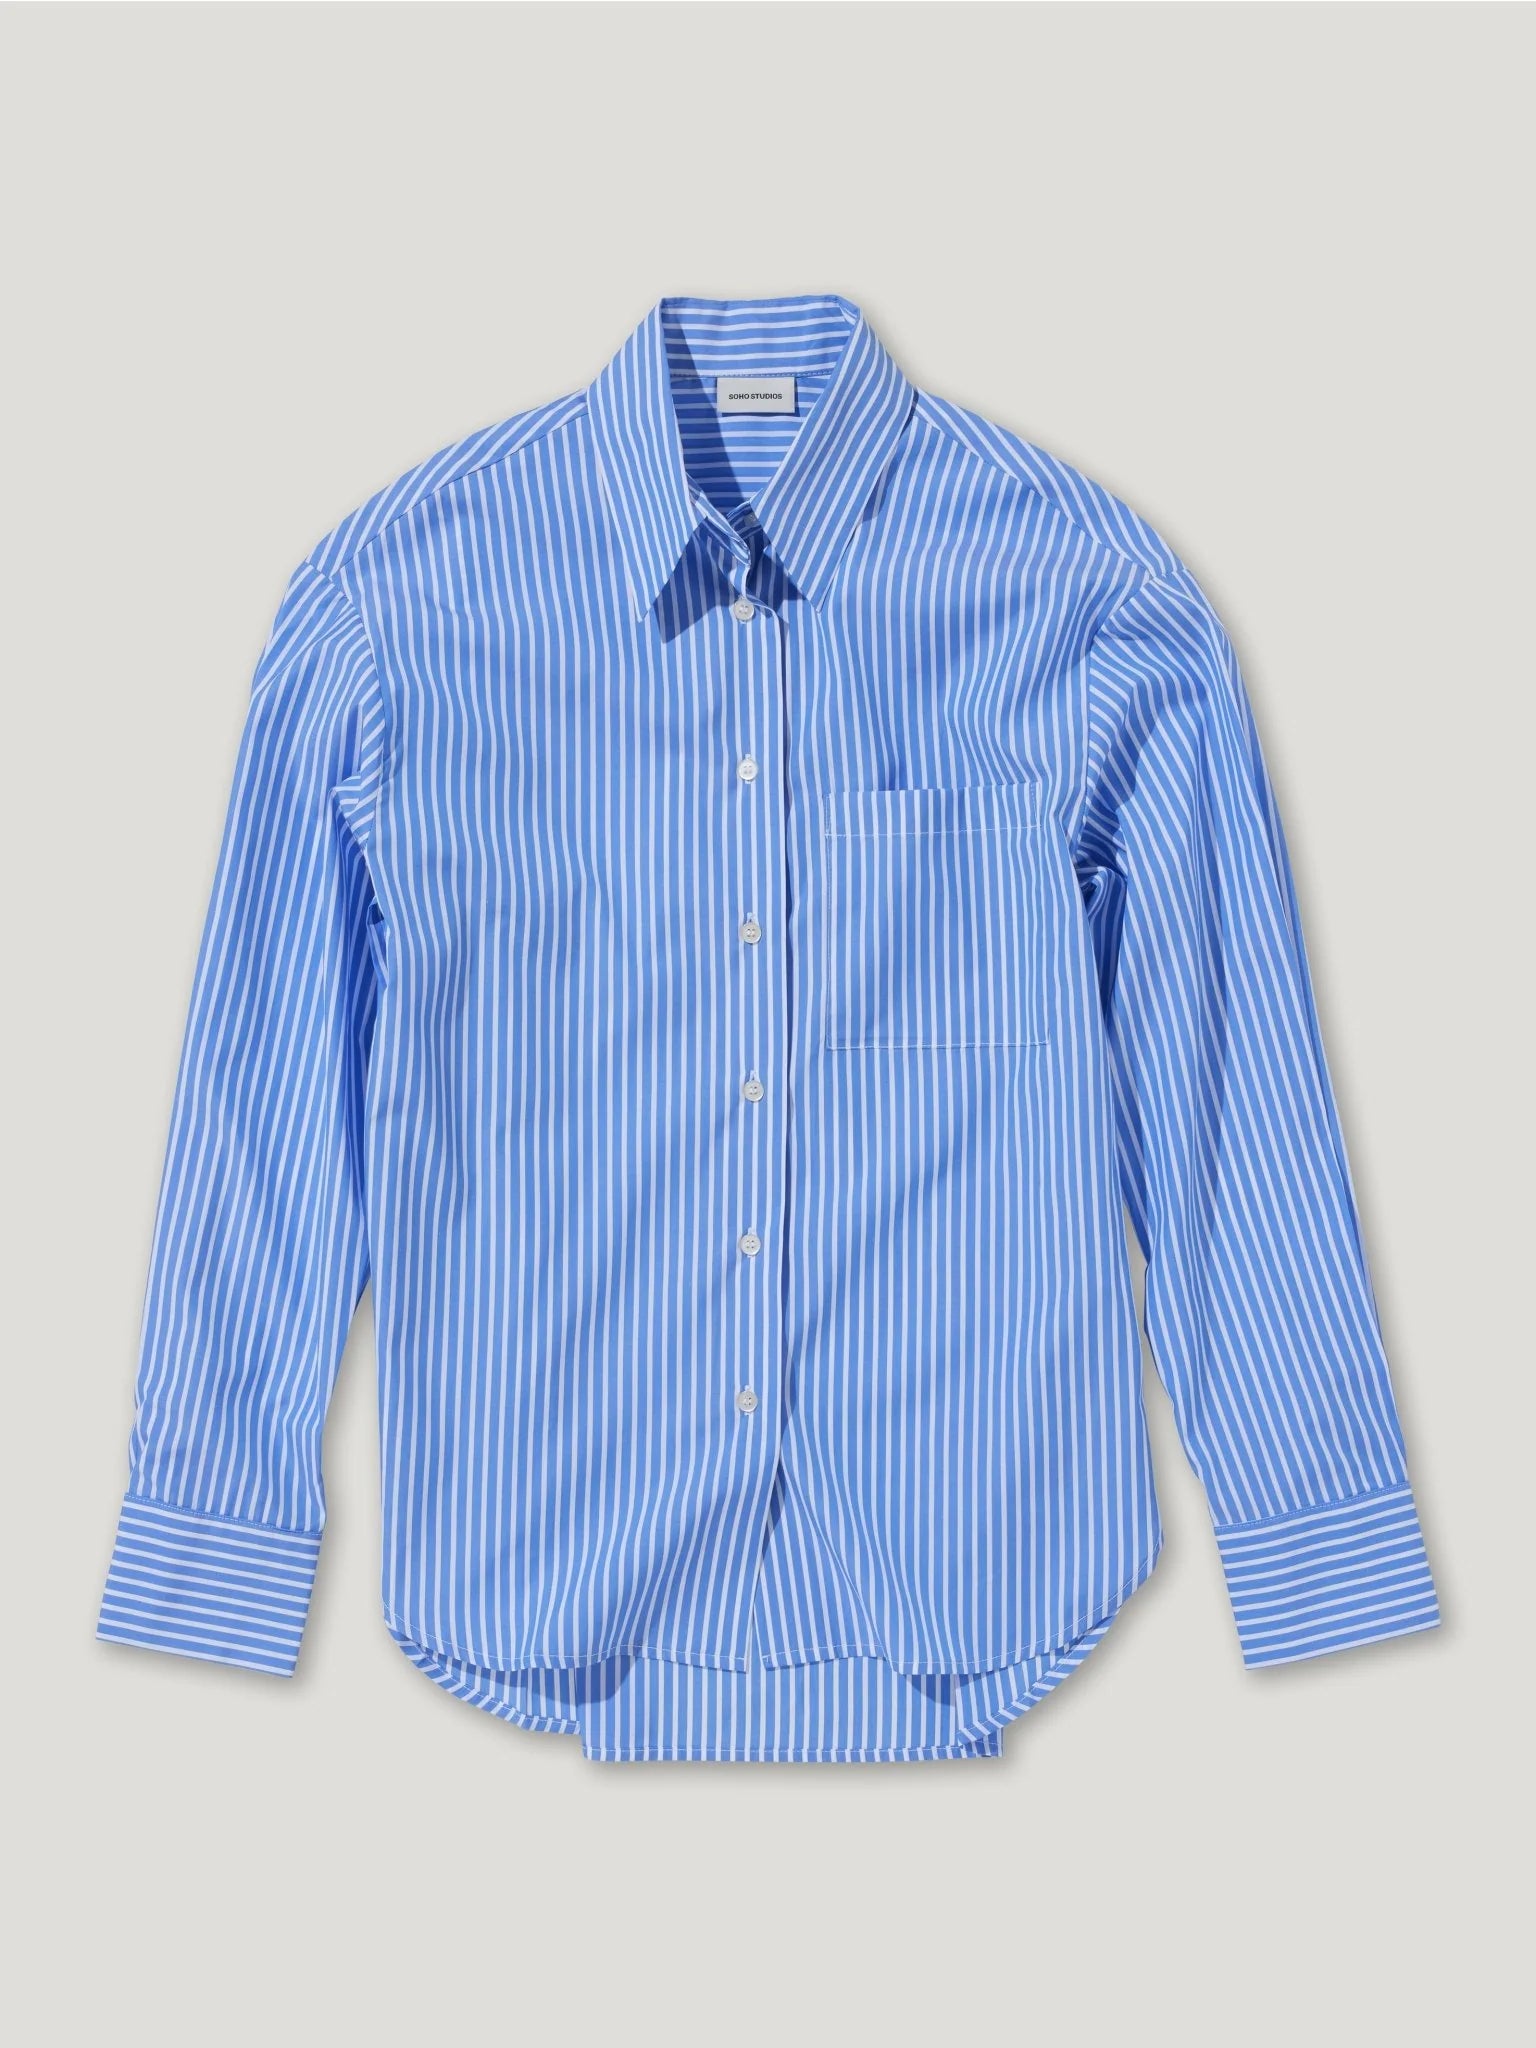 Smilla oversized poplin shirt in blue/white stripes